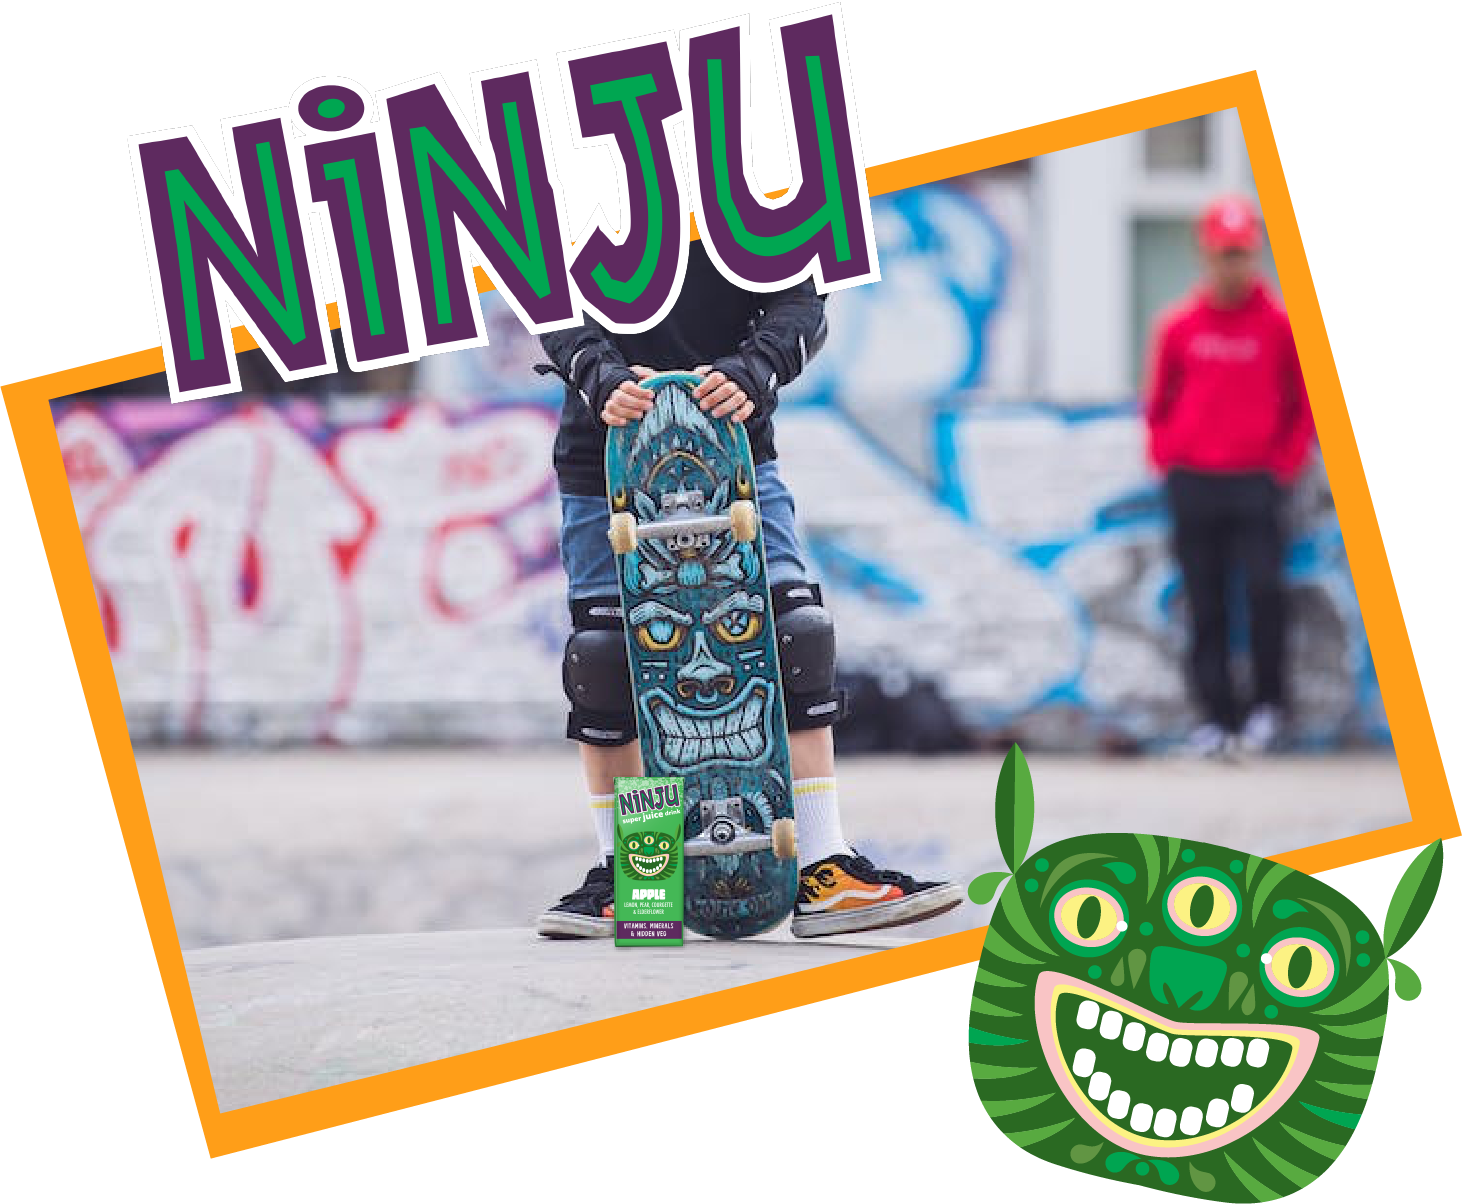 Ninju skateboard kid on the homepage